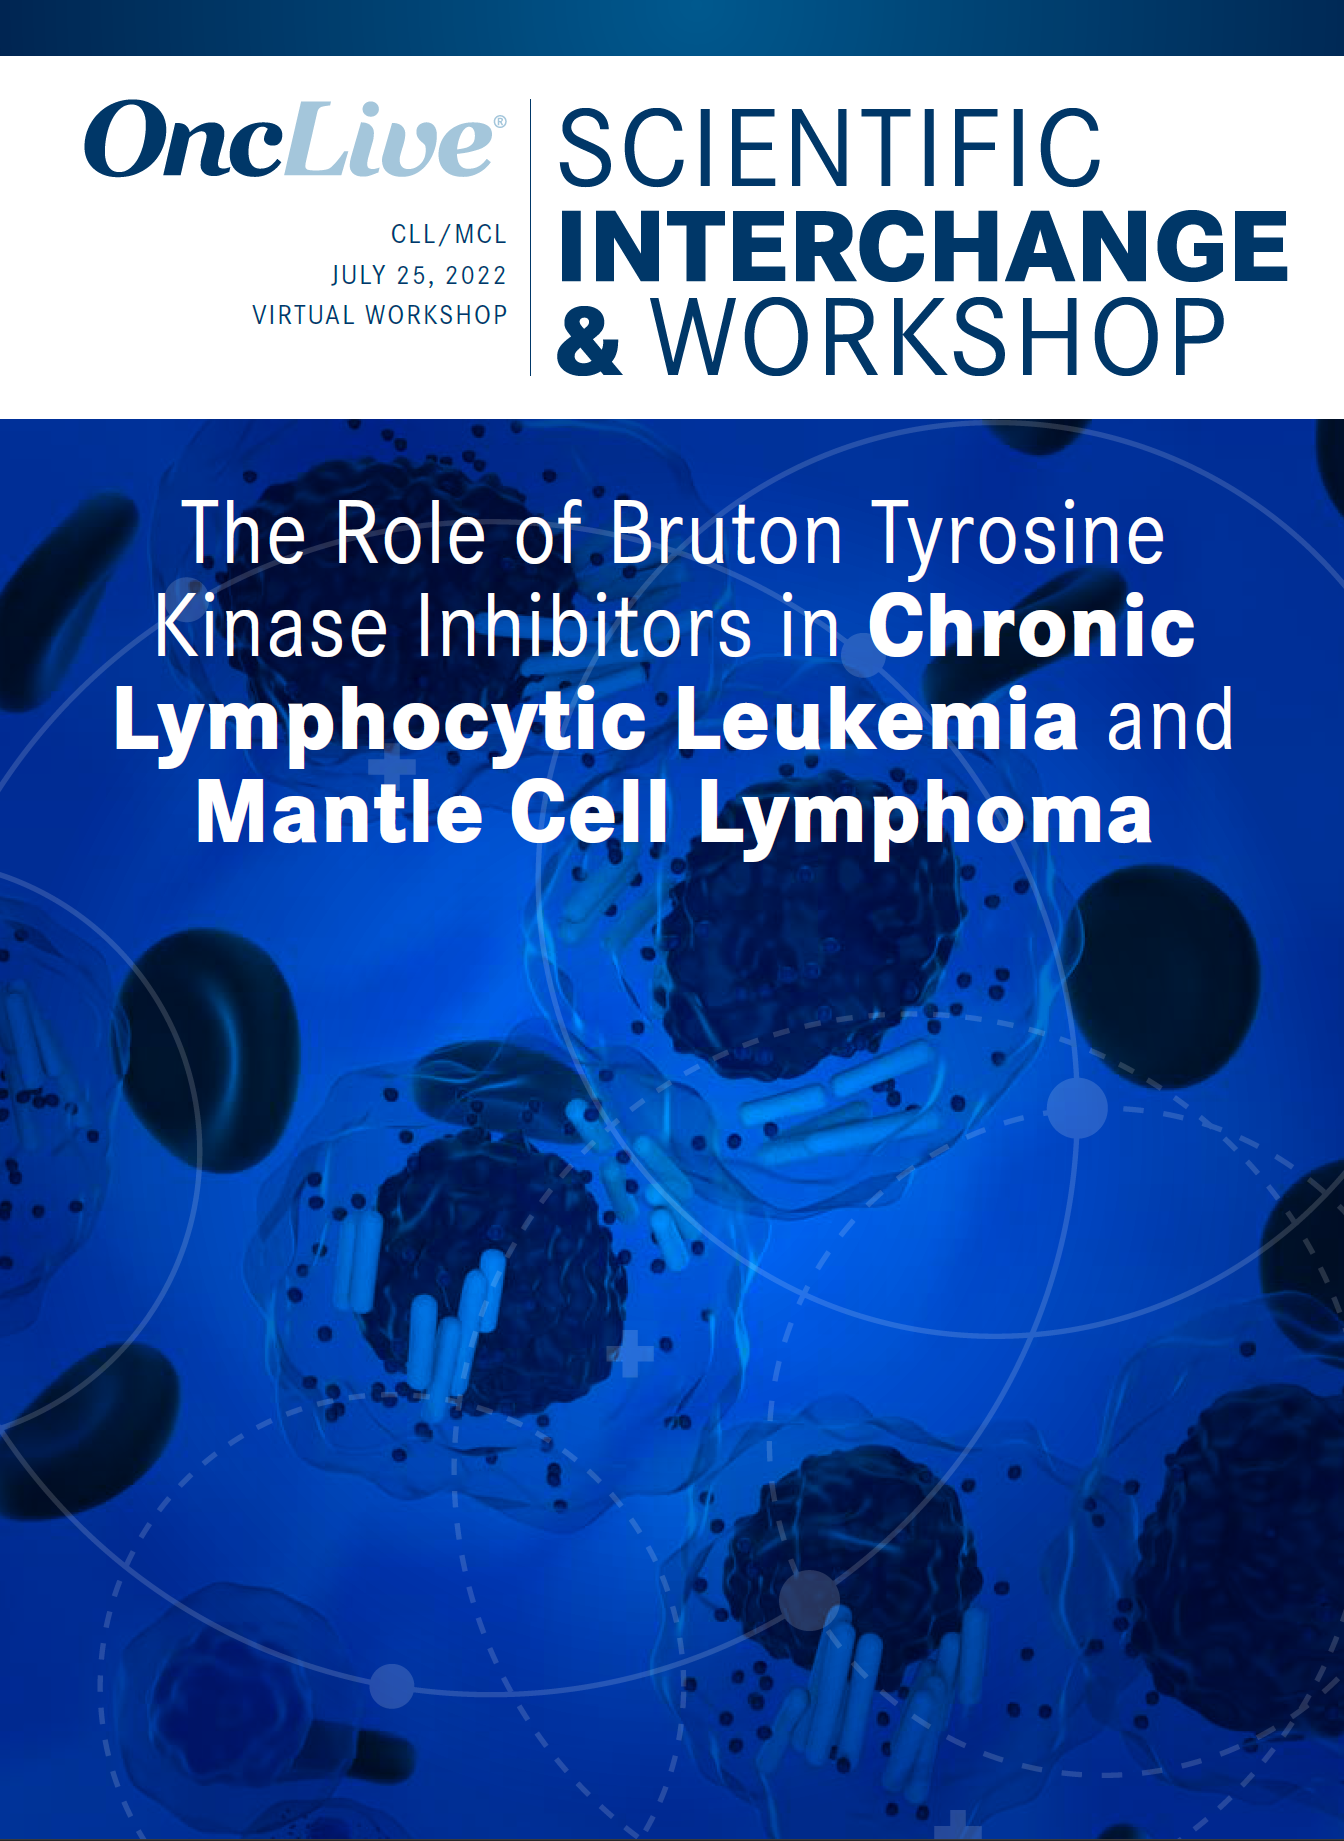 The Role of Bruton Tyrosine Kinase Inhibitors in Chronic Lymphocytic Leukemia and Mantle Cell Lymphoma